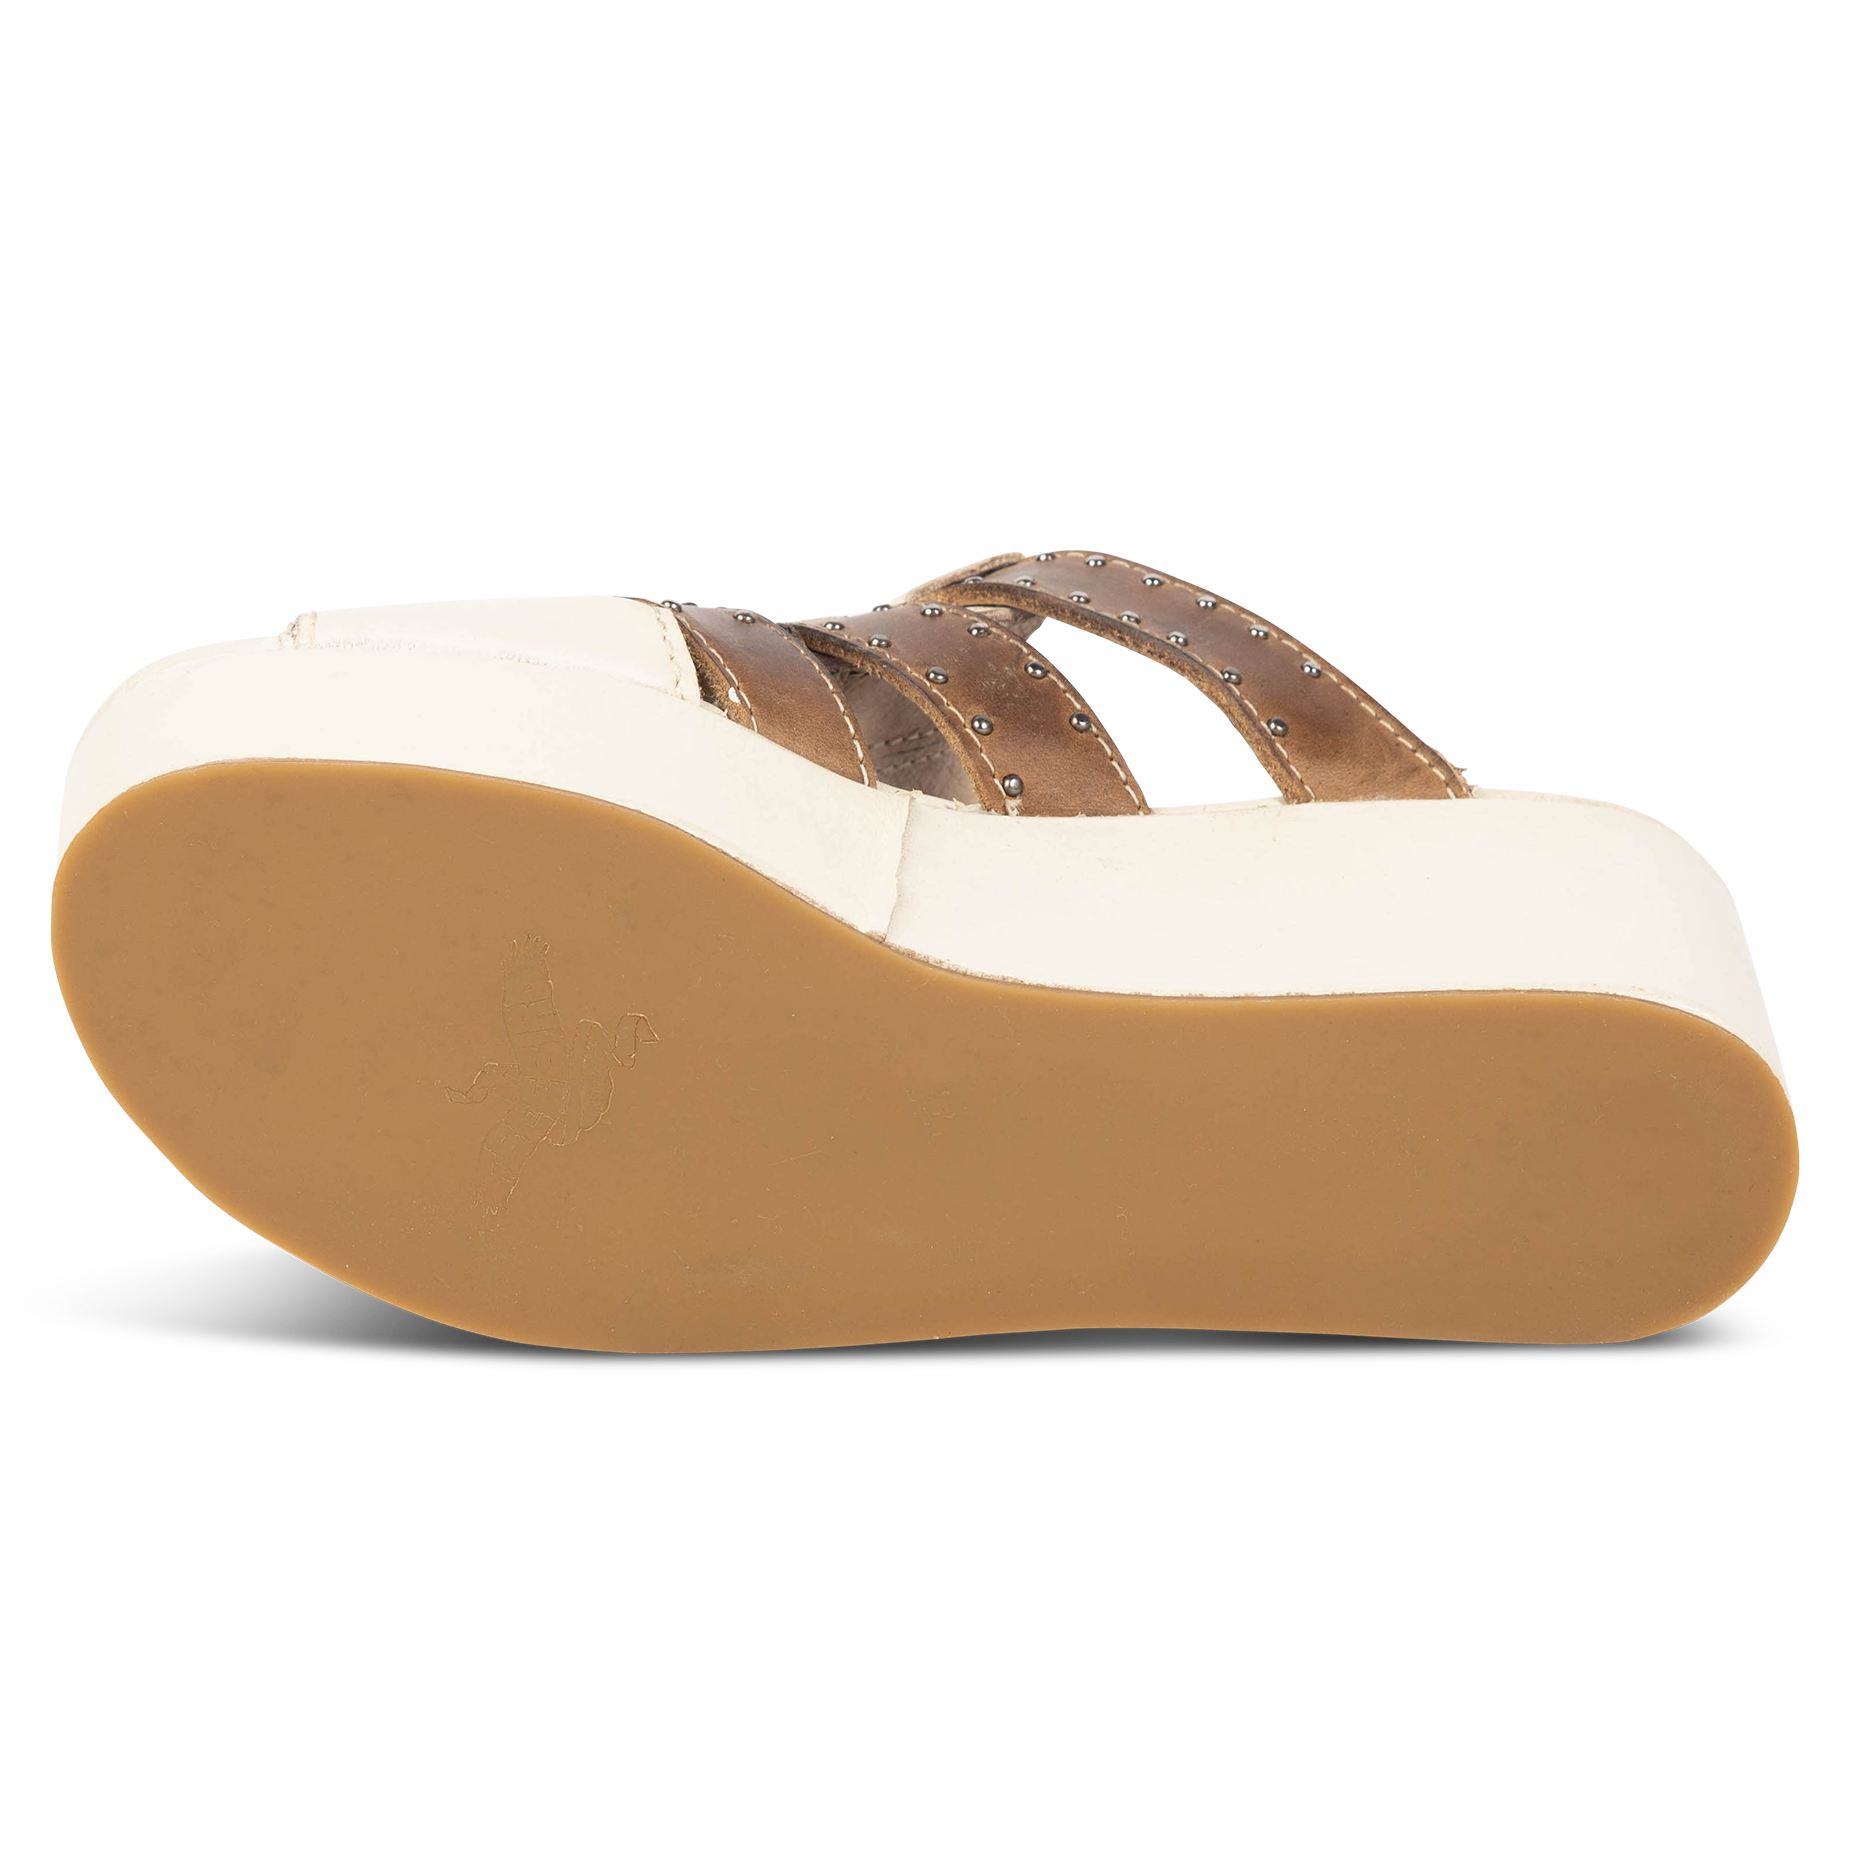 Rubber sole imprinted with FREEBIRD on women's Landi beige platform sandal